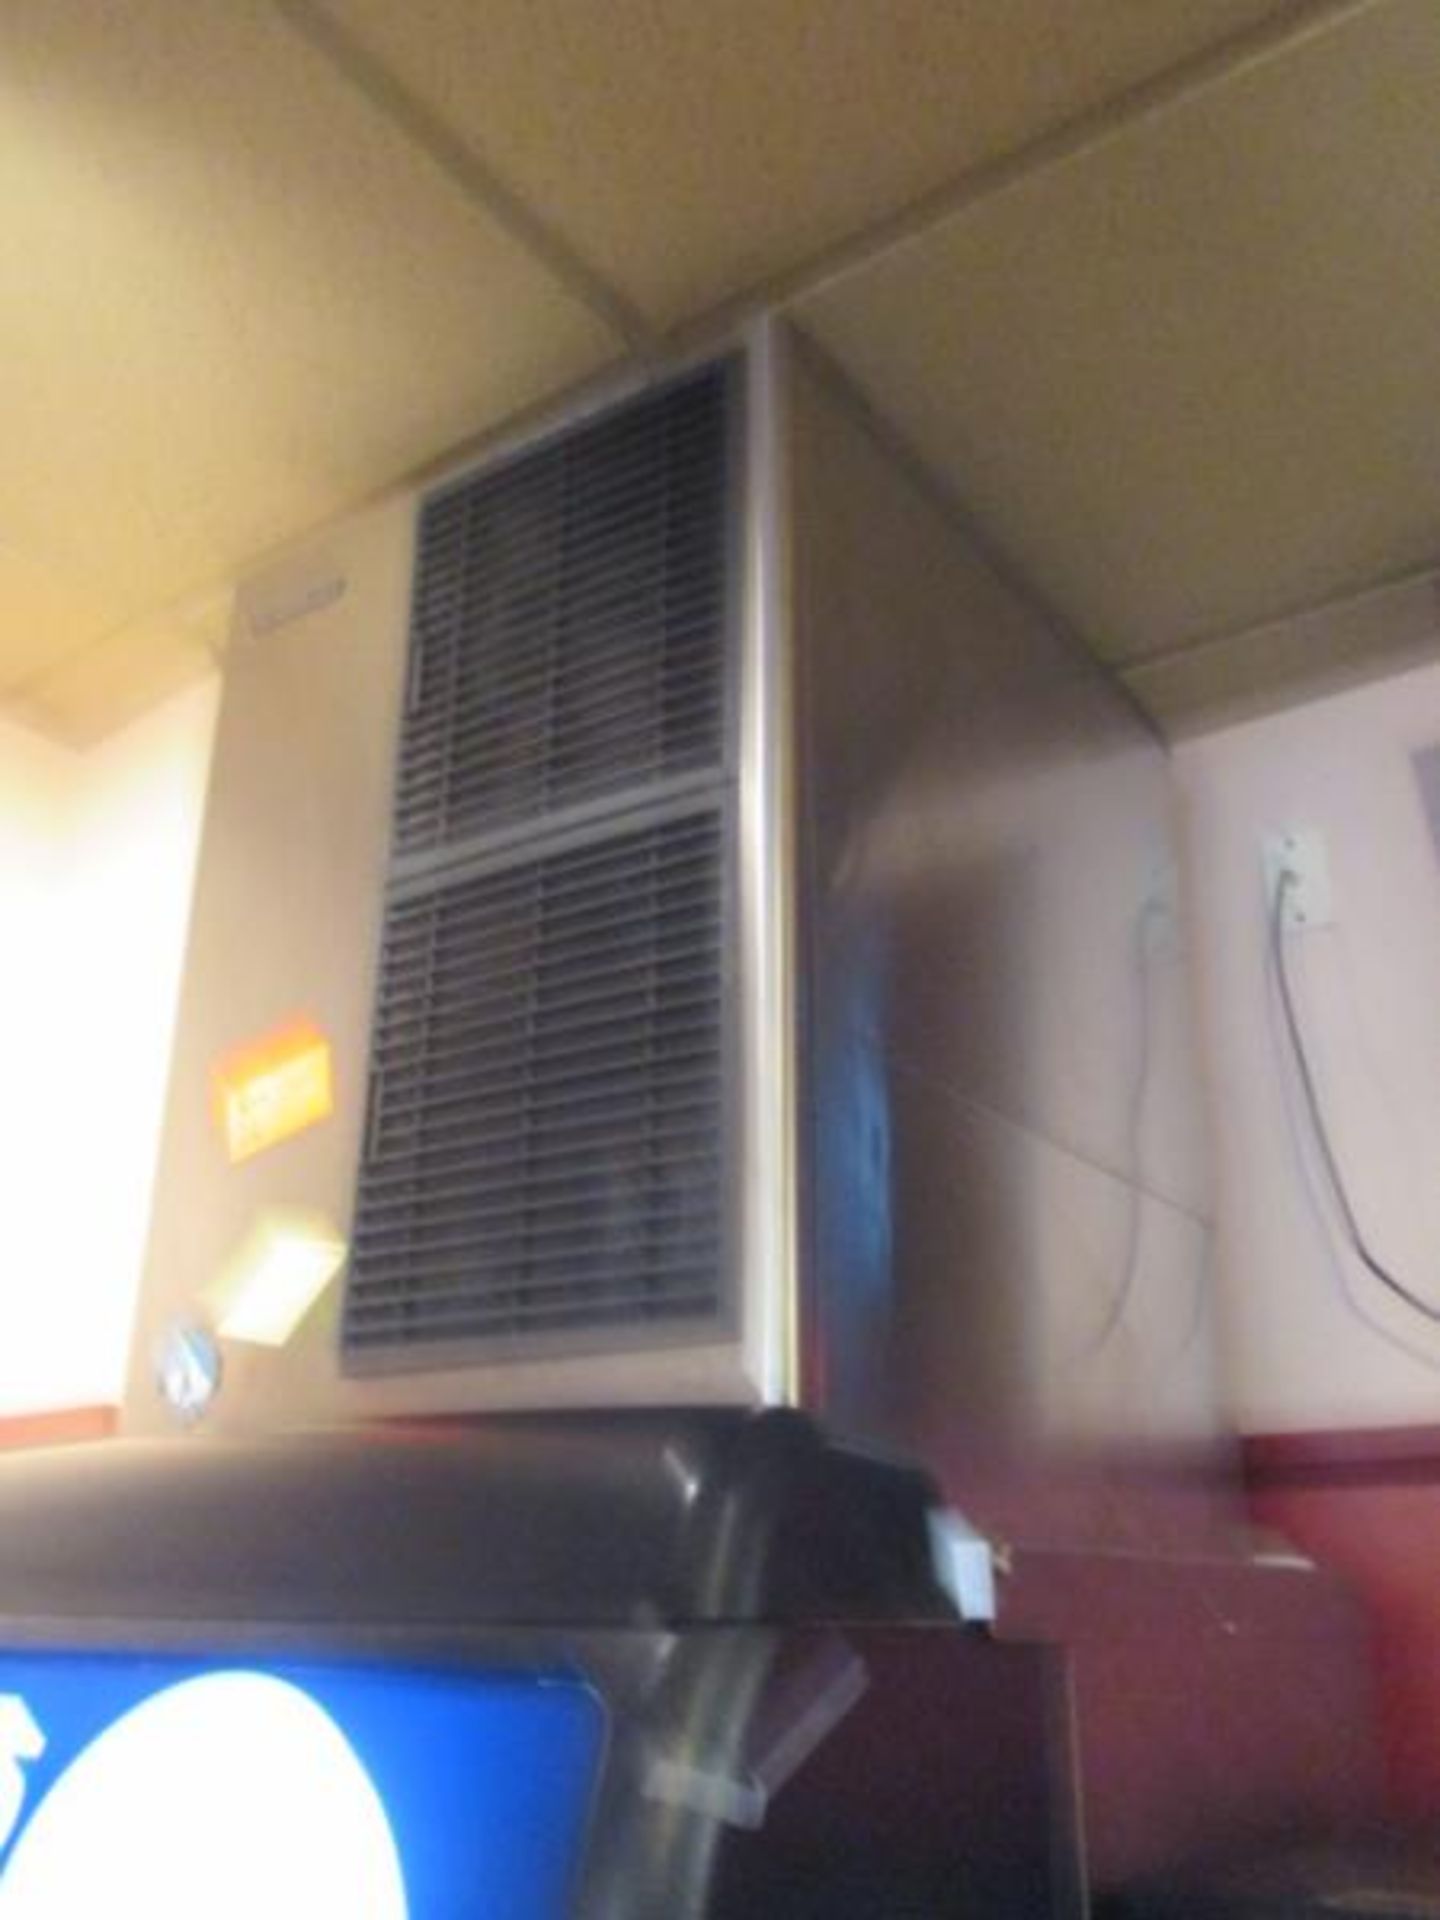 Hoshizaki Ice Machine, No Storage Means, Air Cooled - Image 2 of 2